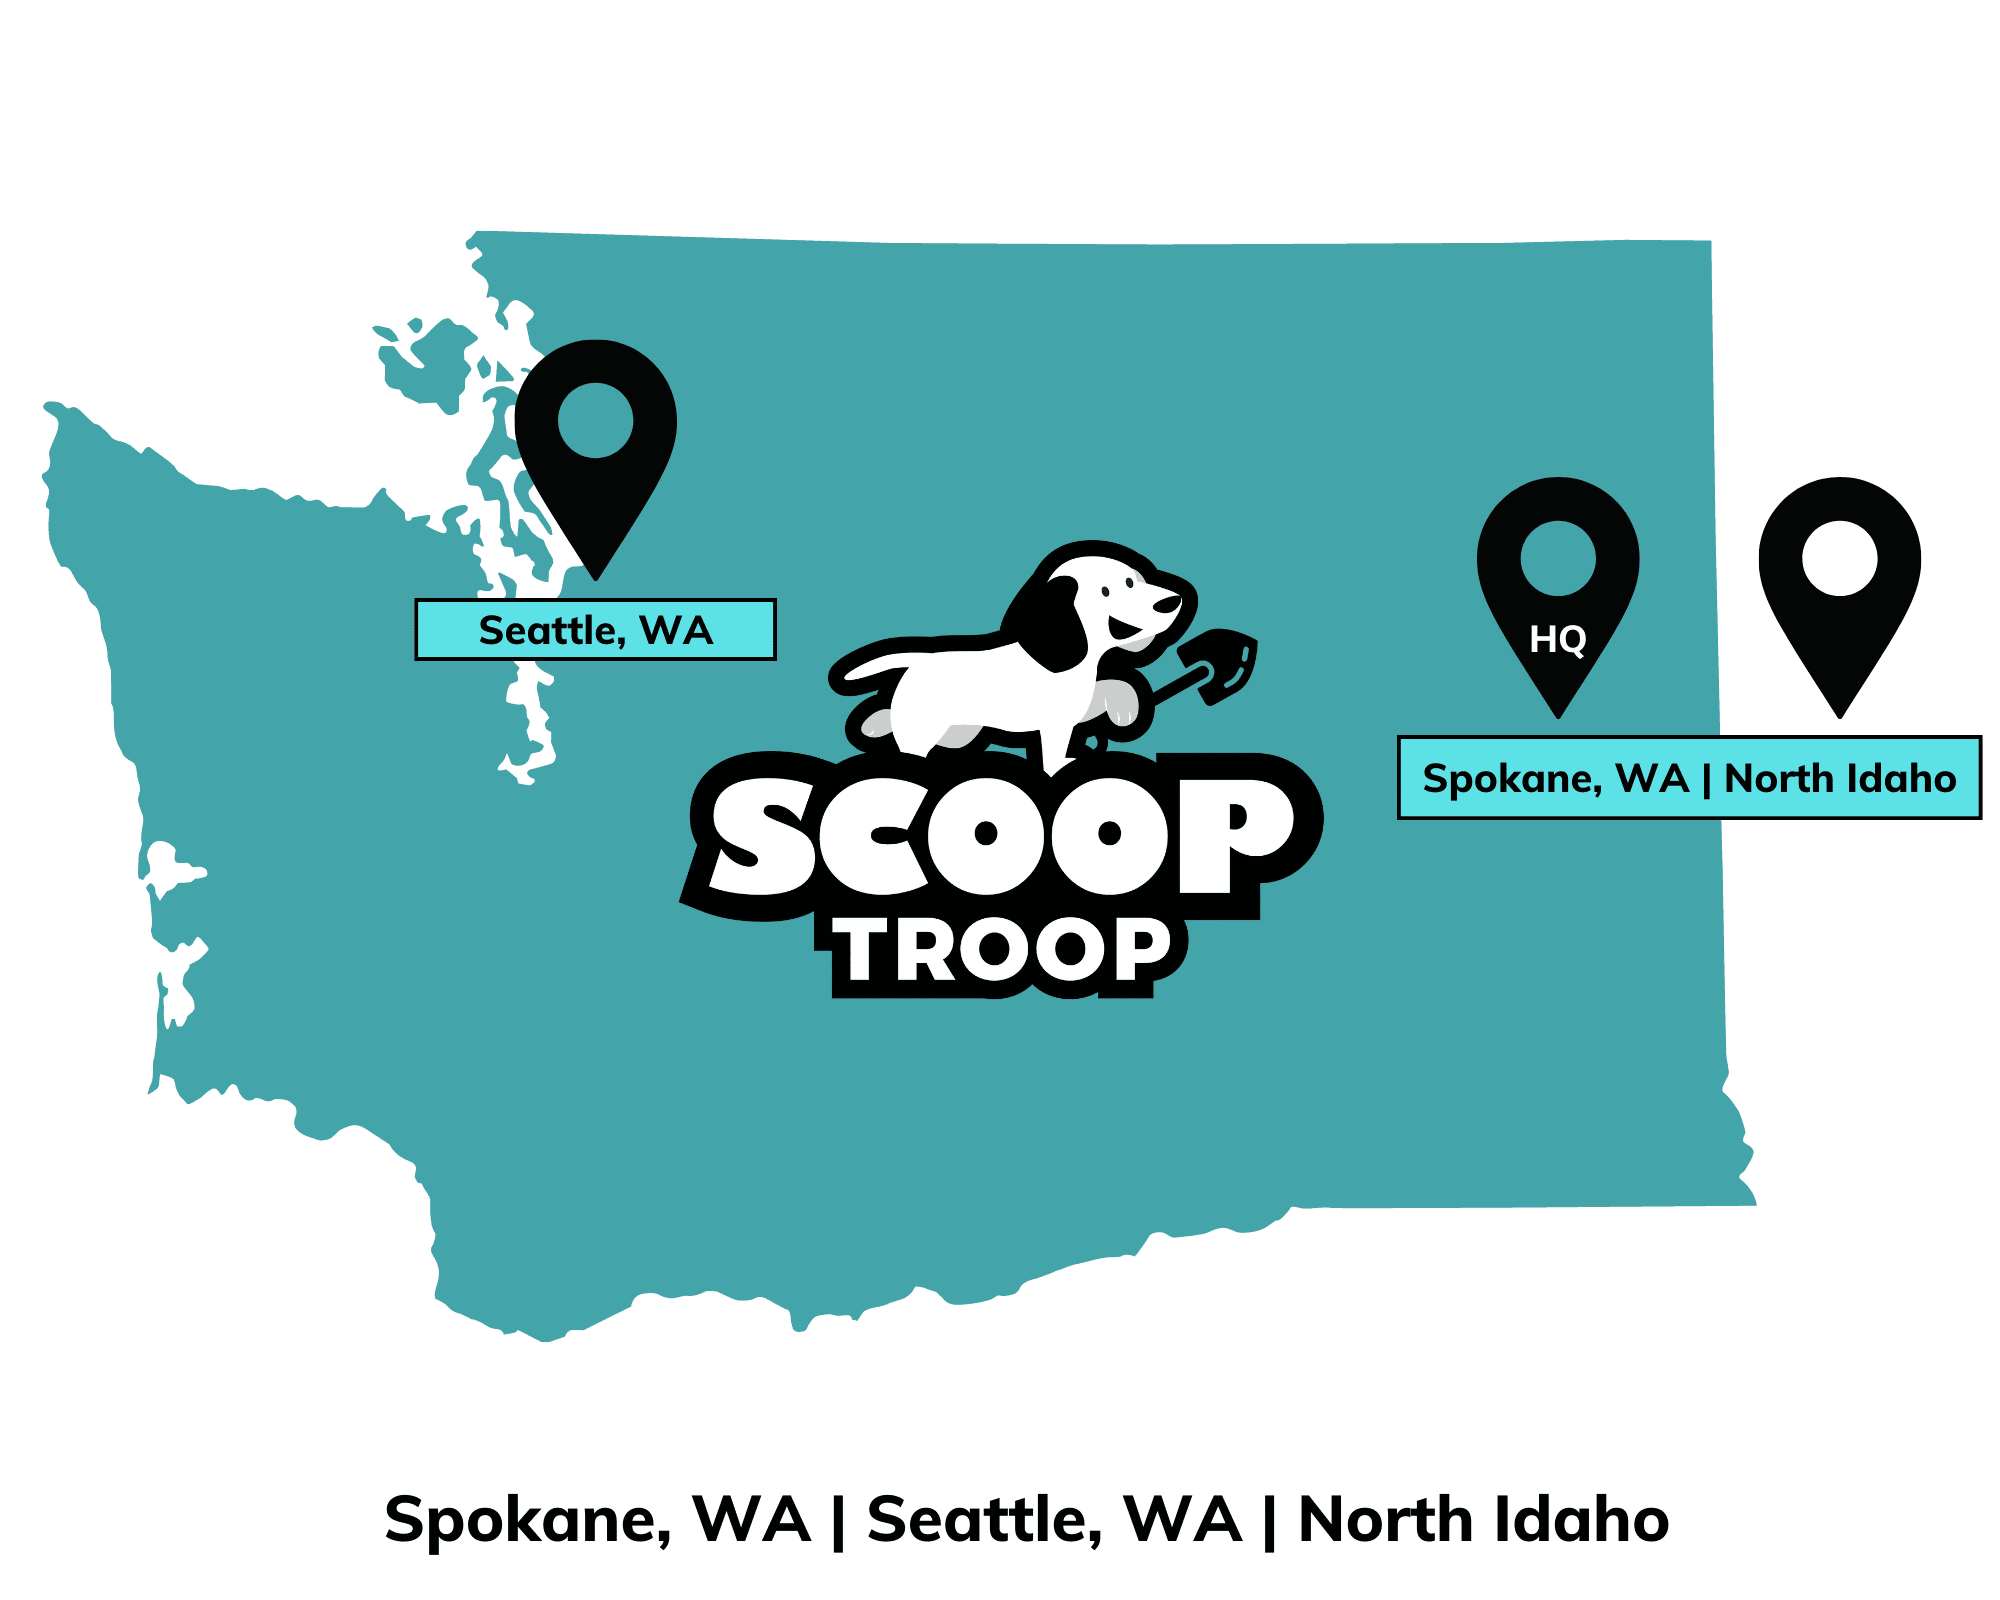 Scoop Troop location map. Seattle, WA | Spokane, WA | North Idaho.